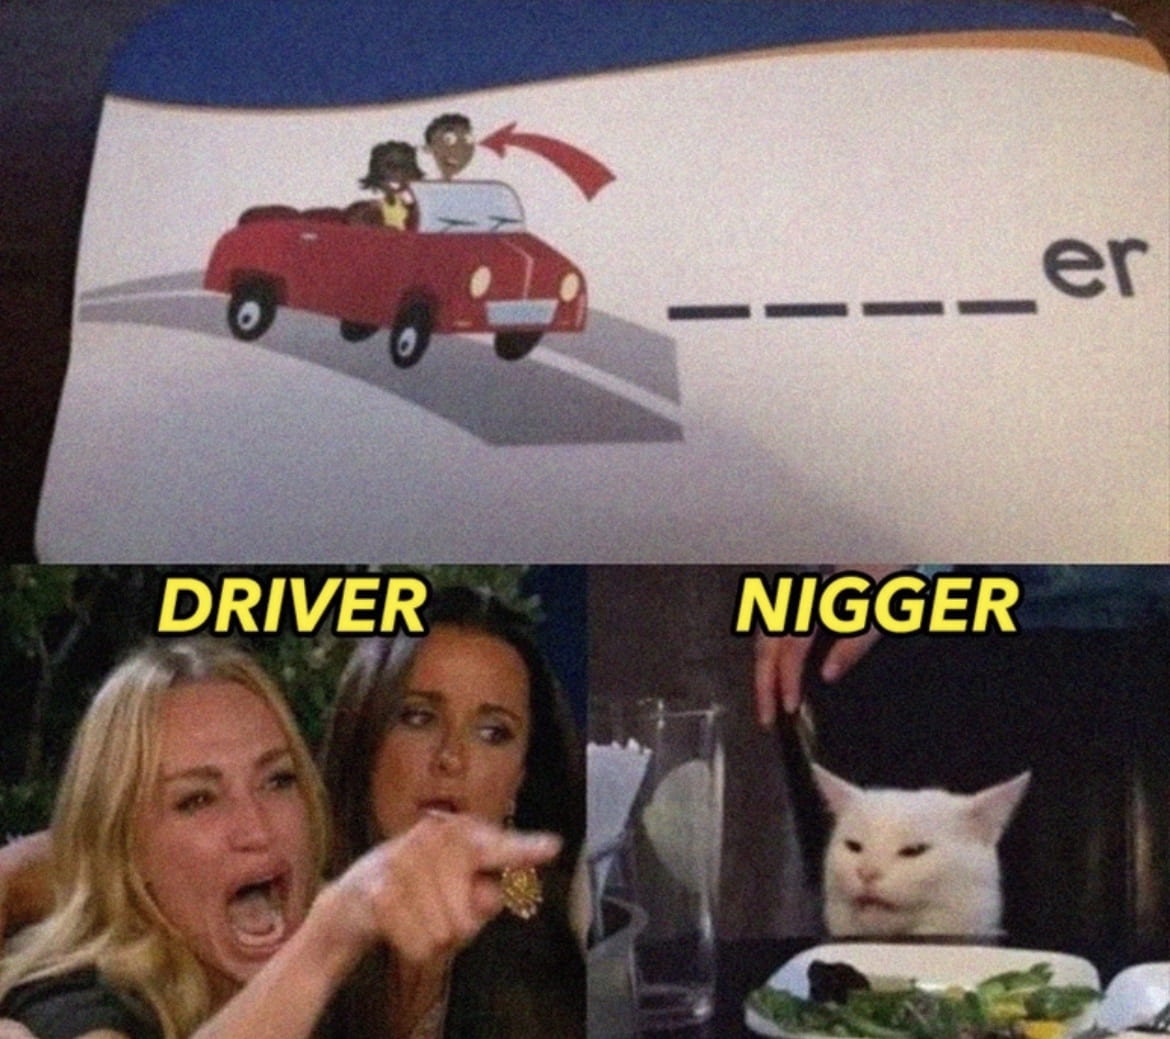 DRIVER or NIGGER